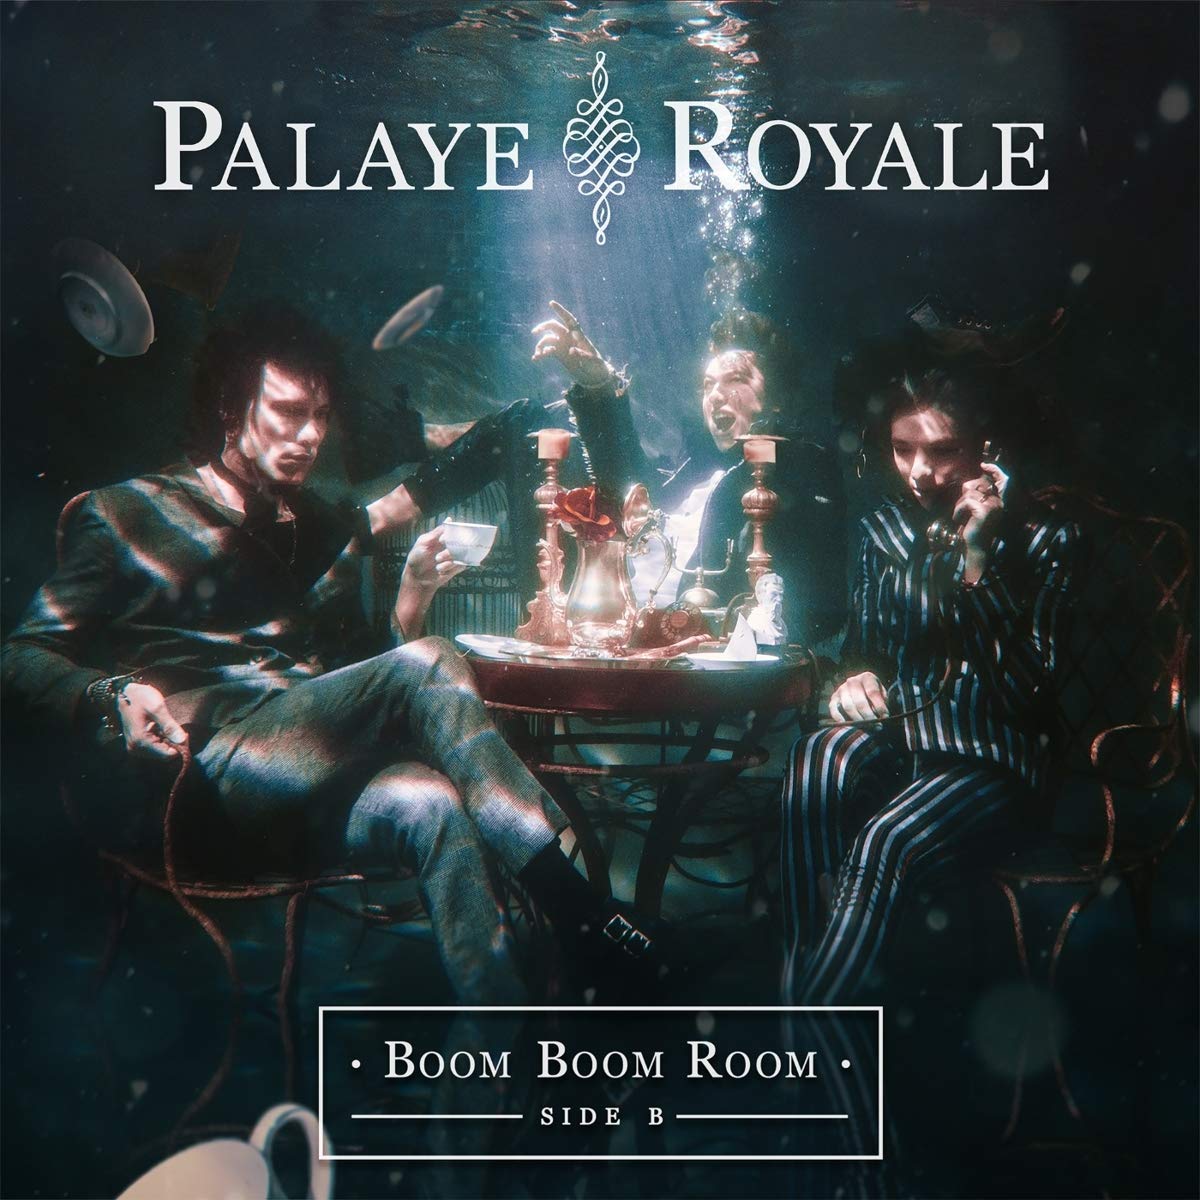 Palaye Royale - Boom Boom Room Side B vinyl cover